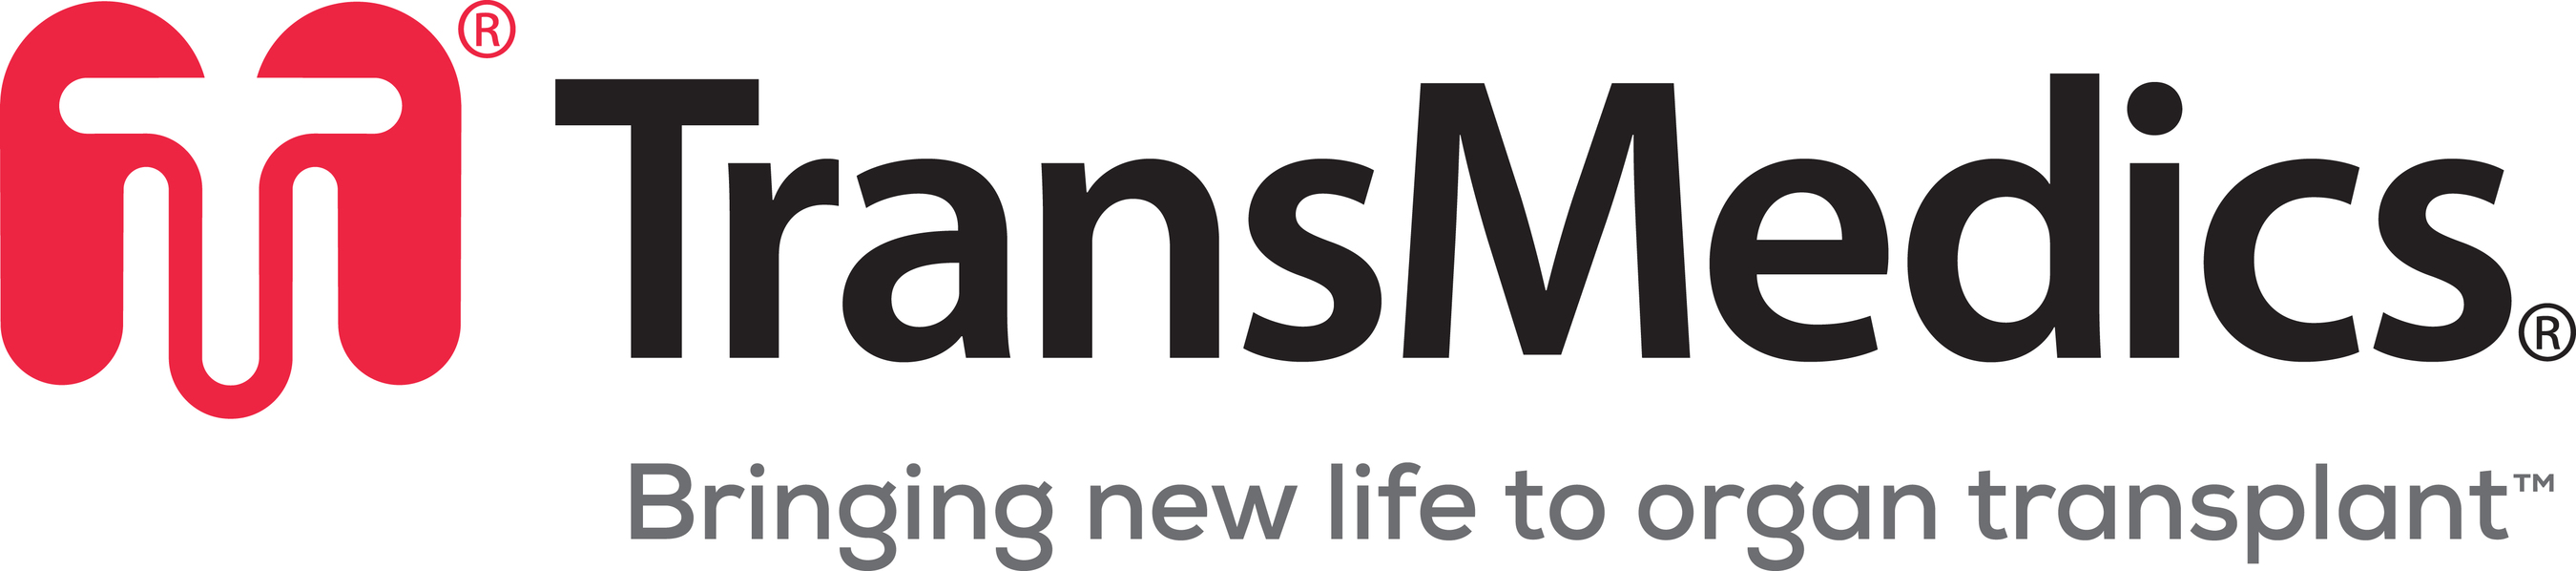 TransMedics Logo.